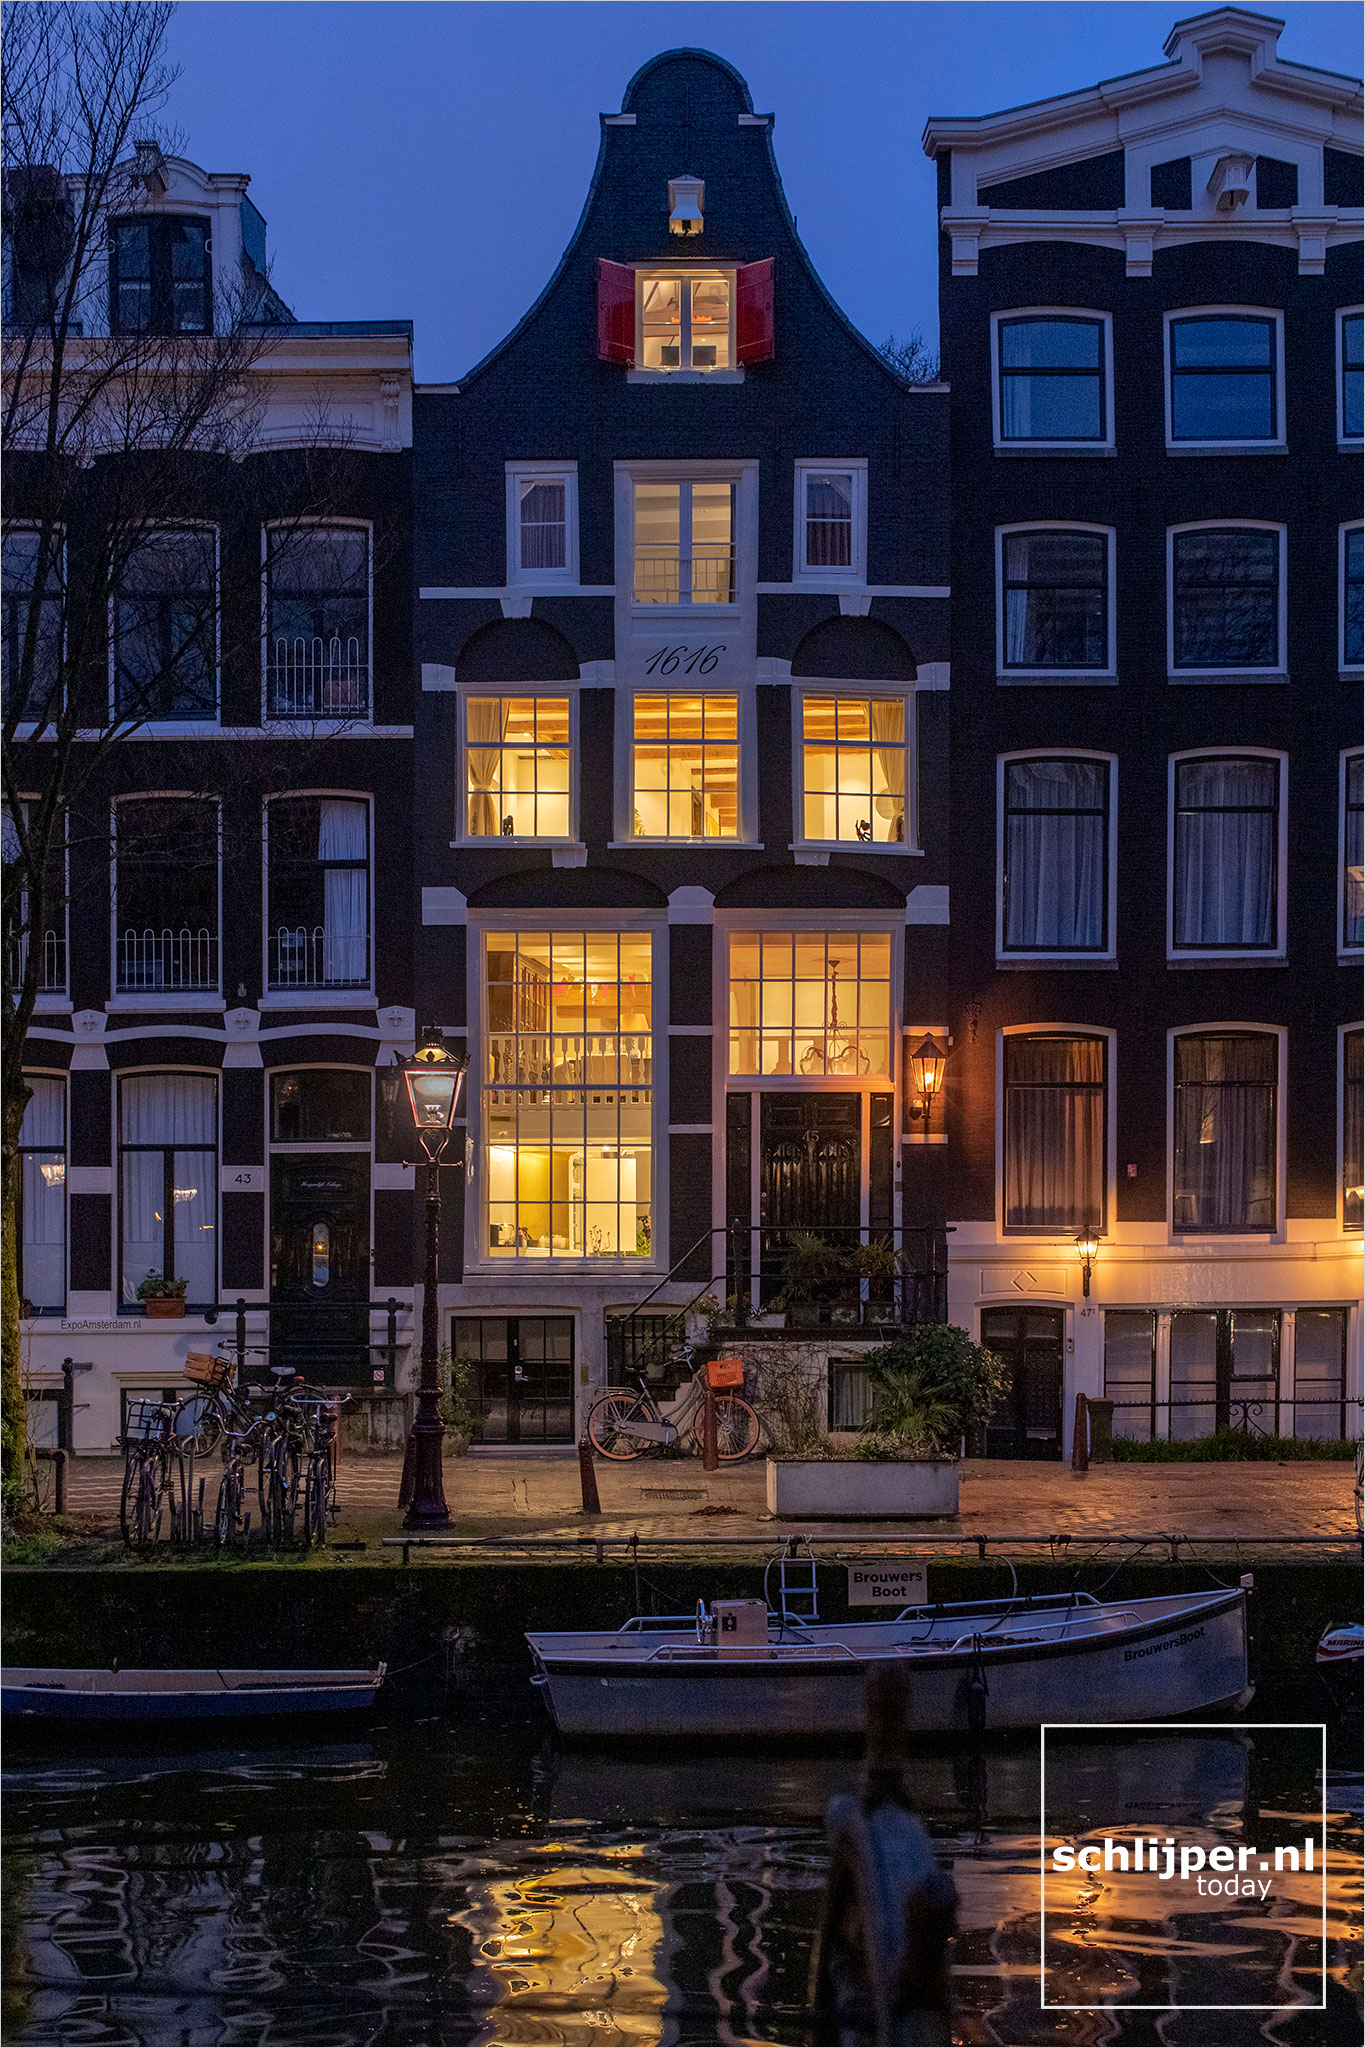 The Netherlands, Amsterdam, 11 december 2020